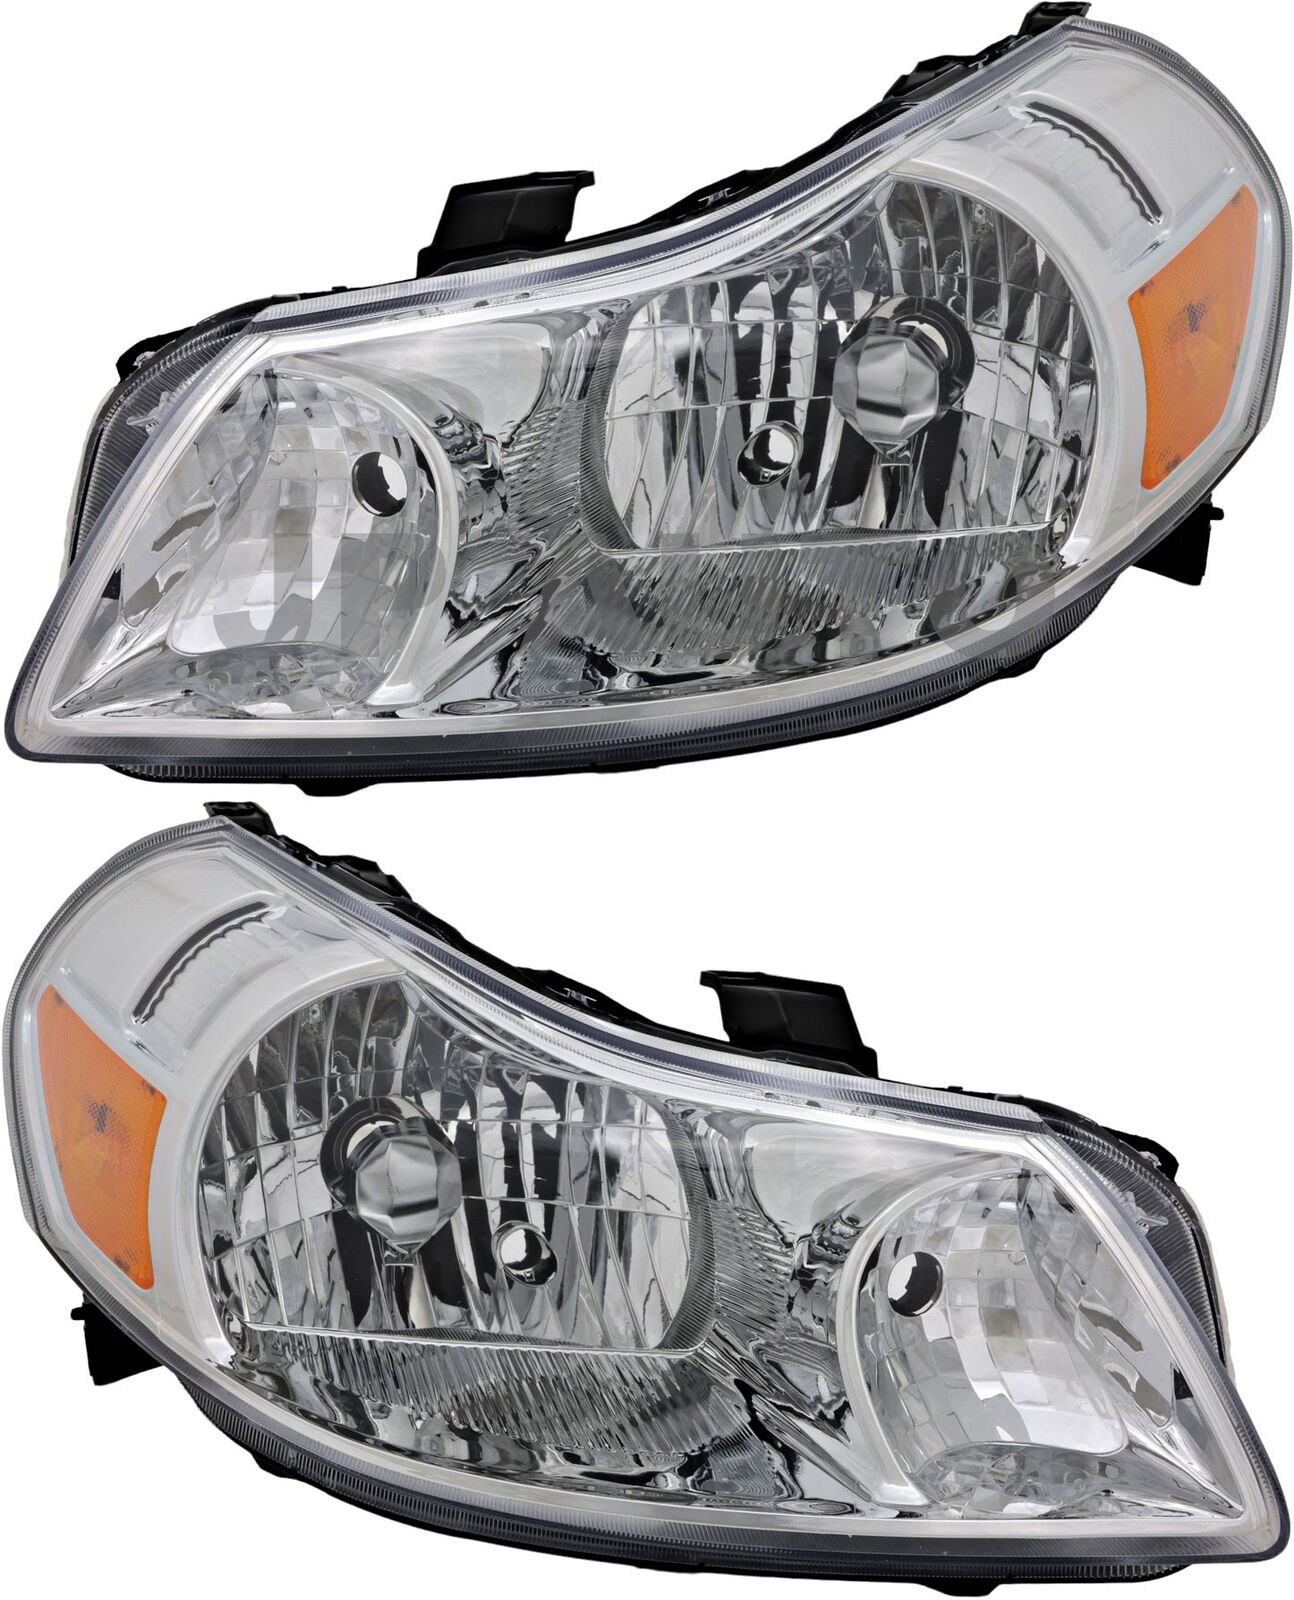 For 2007-2013 Suzuki SX4 Headlight Halogen Set Driver and Passenger Side